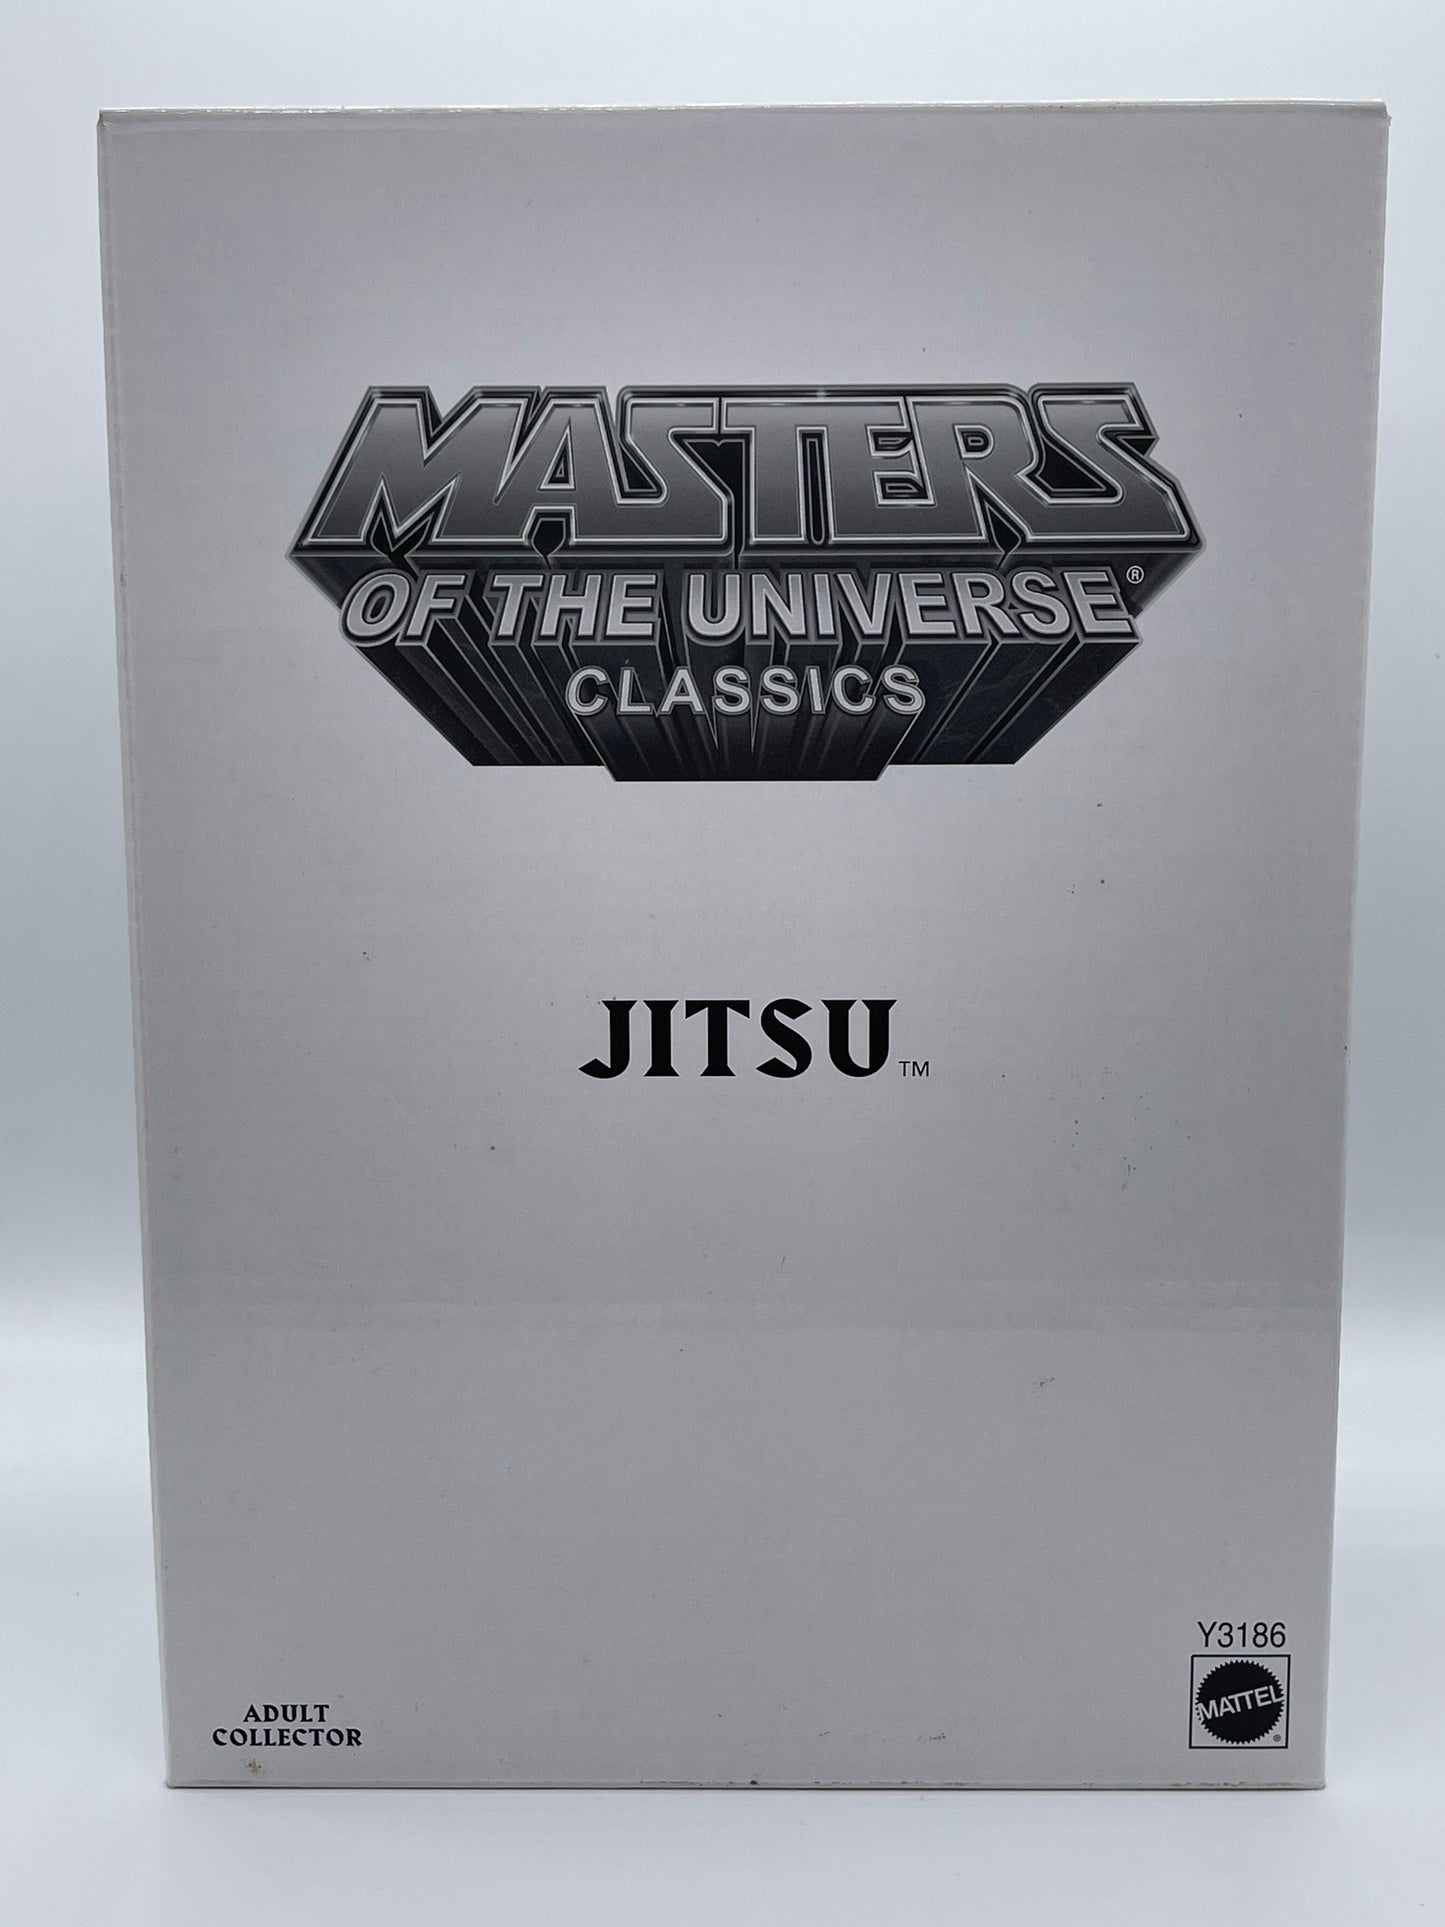 Masters of the Universe Classics Jitsu